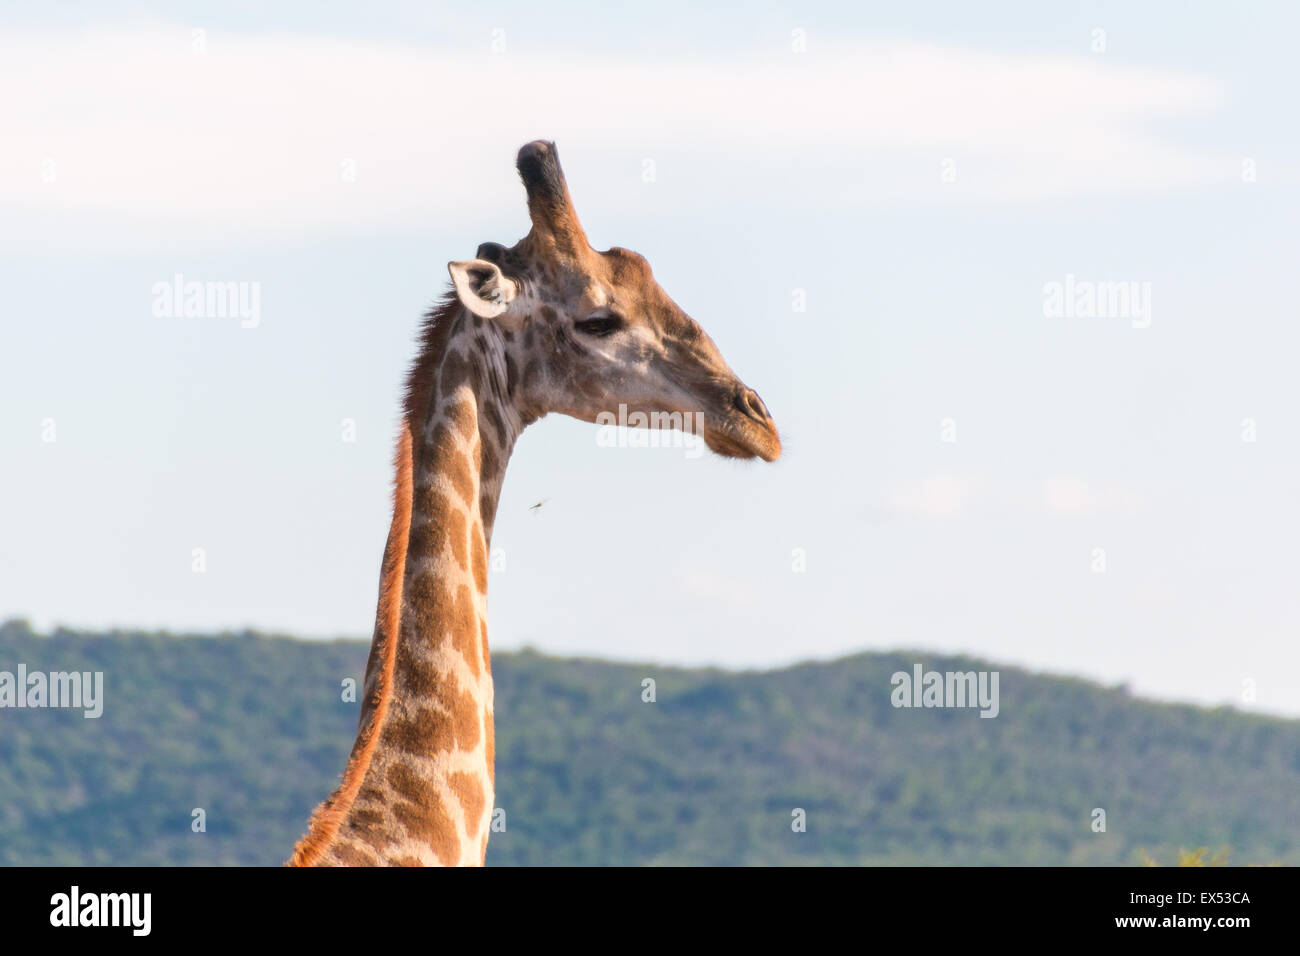 Giraffe at the Mokolodi Nature Reserve in Botswana Stock Photo